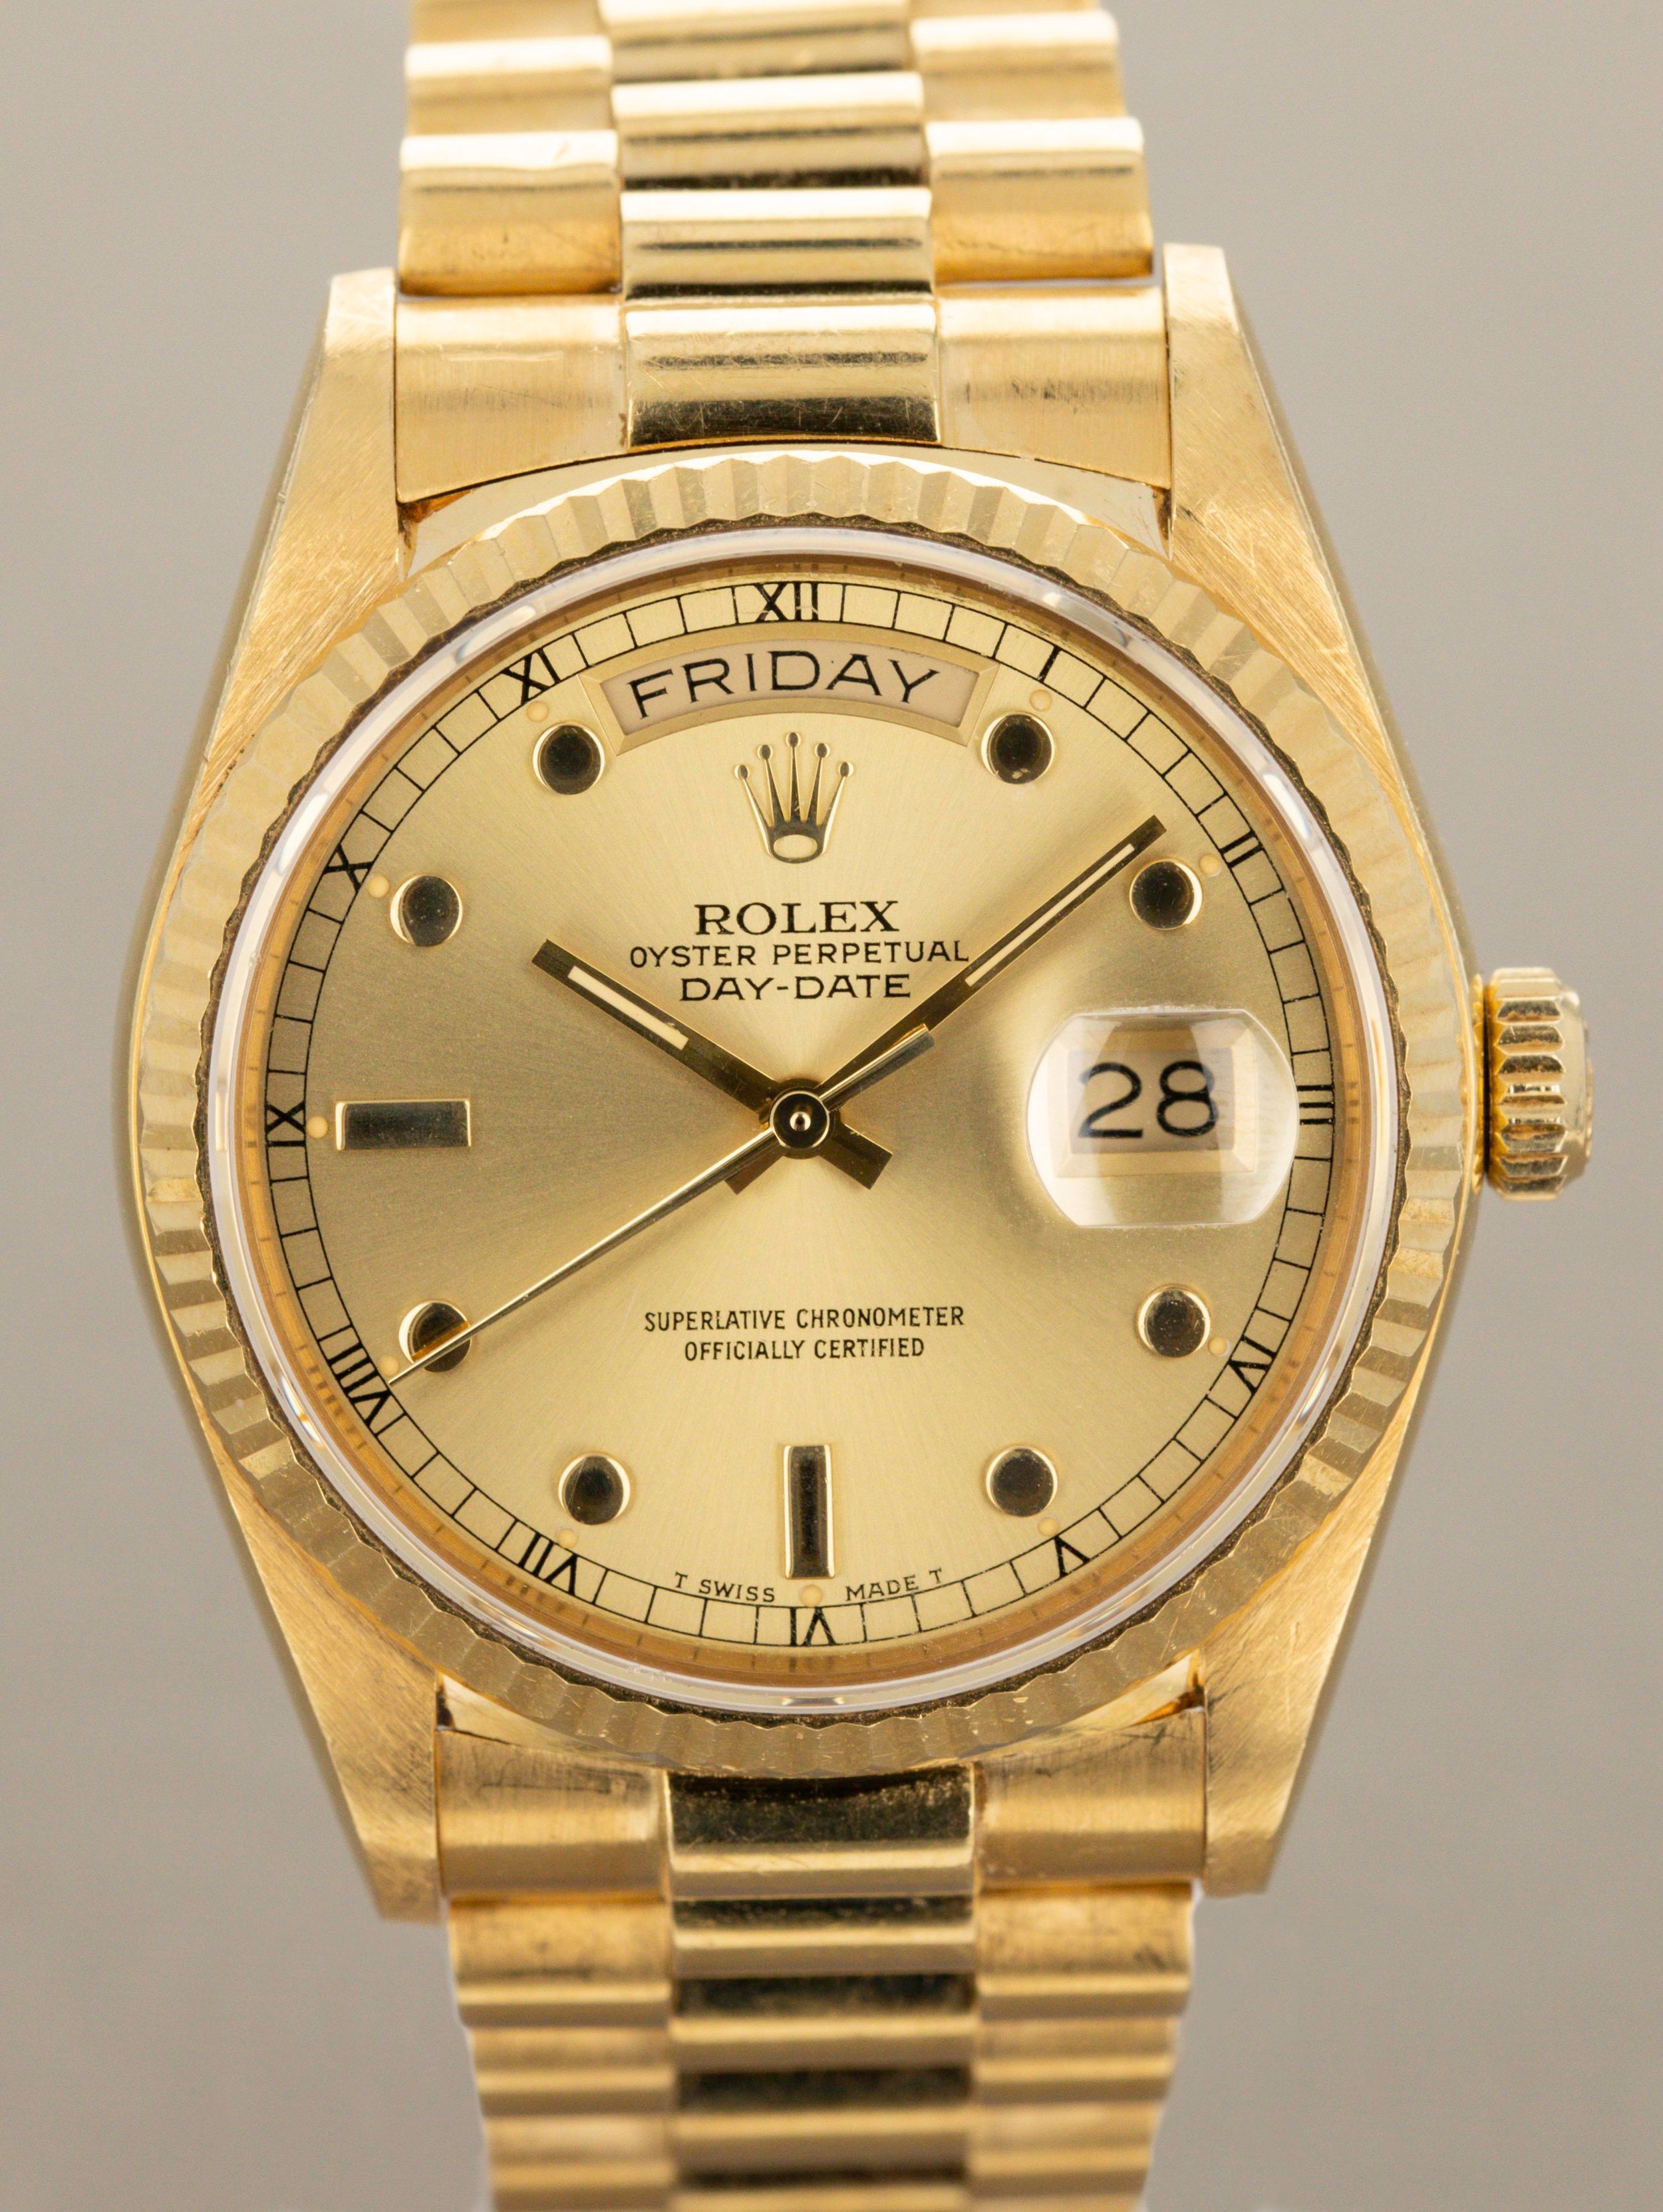 Rolex Day-Date Ref. 18038 - 'Pinball' Dial